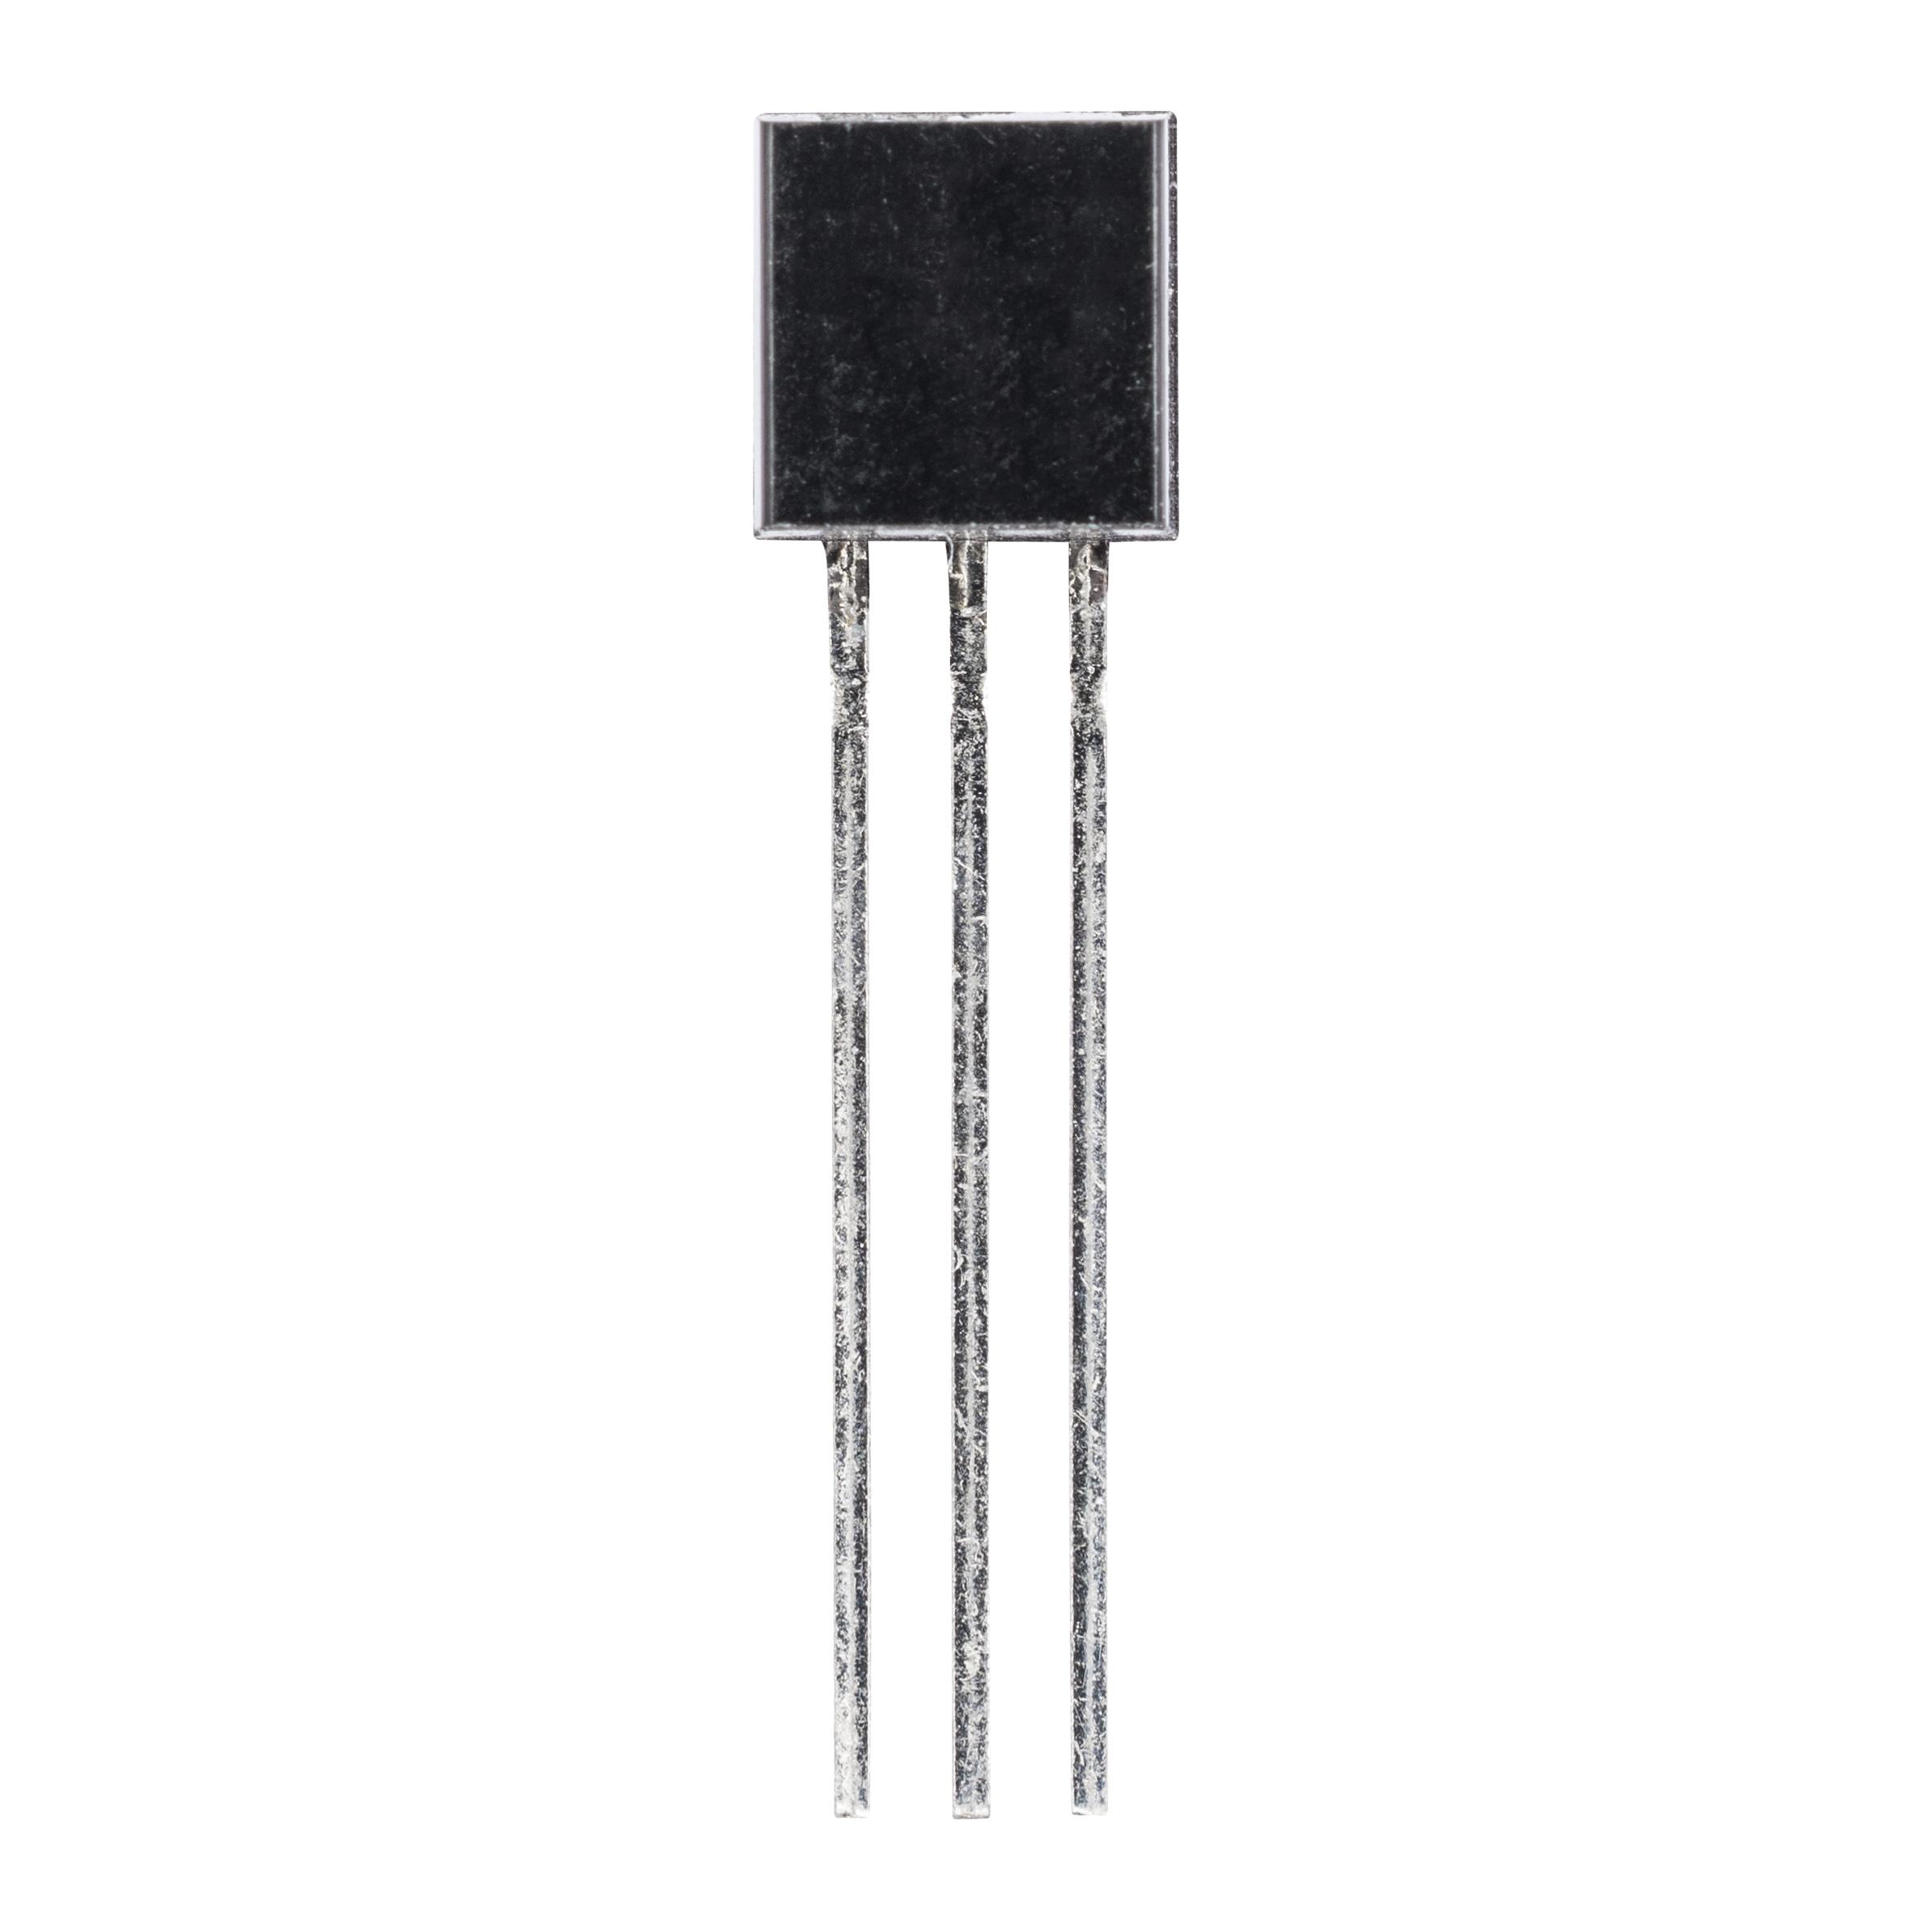 2N6517 (Bipolartransistor NPN)